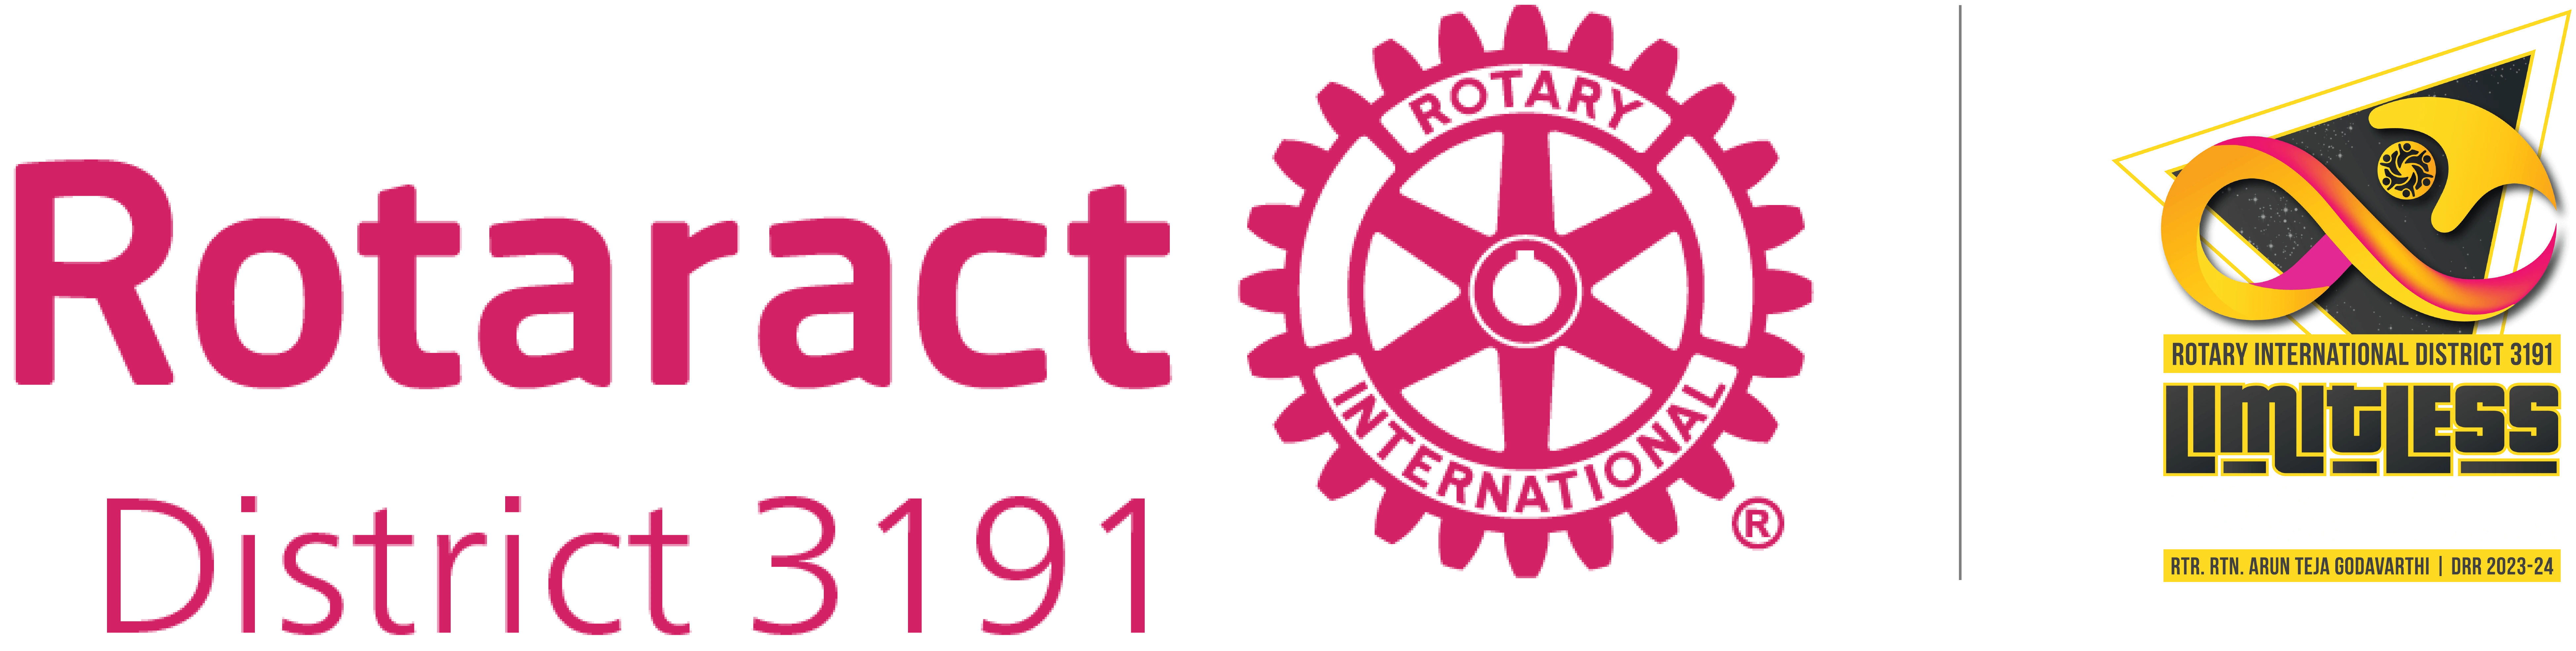 Primary-Standard logo